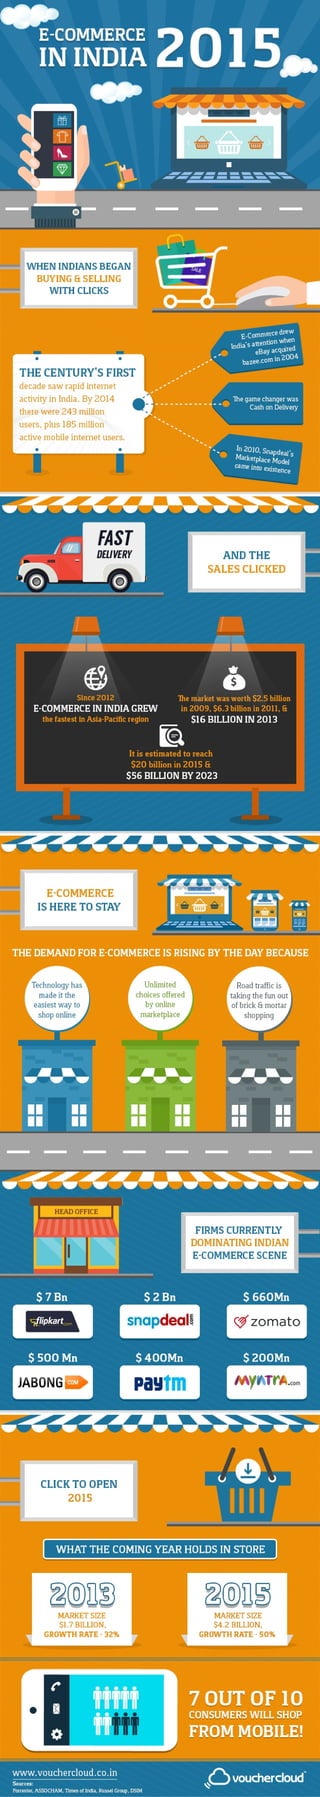 E-Commerce in India in 2015